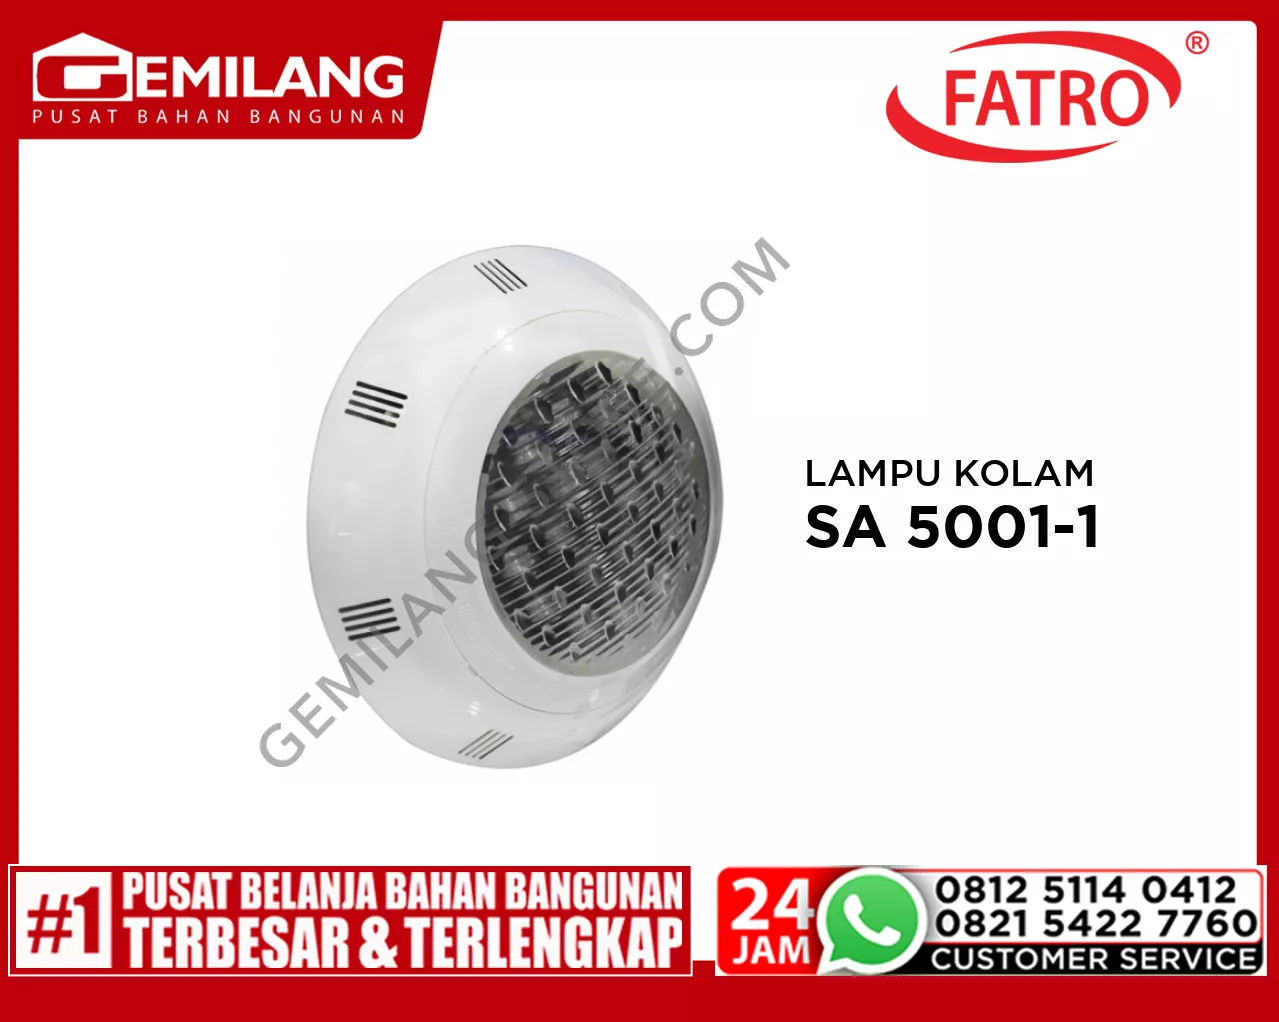 FATRO LAMPU KOLAM SA 5001-1 WH 18w/12v